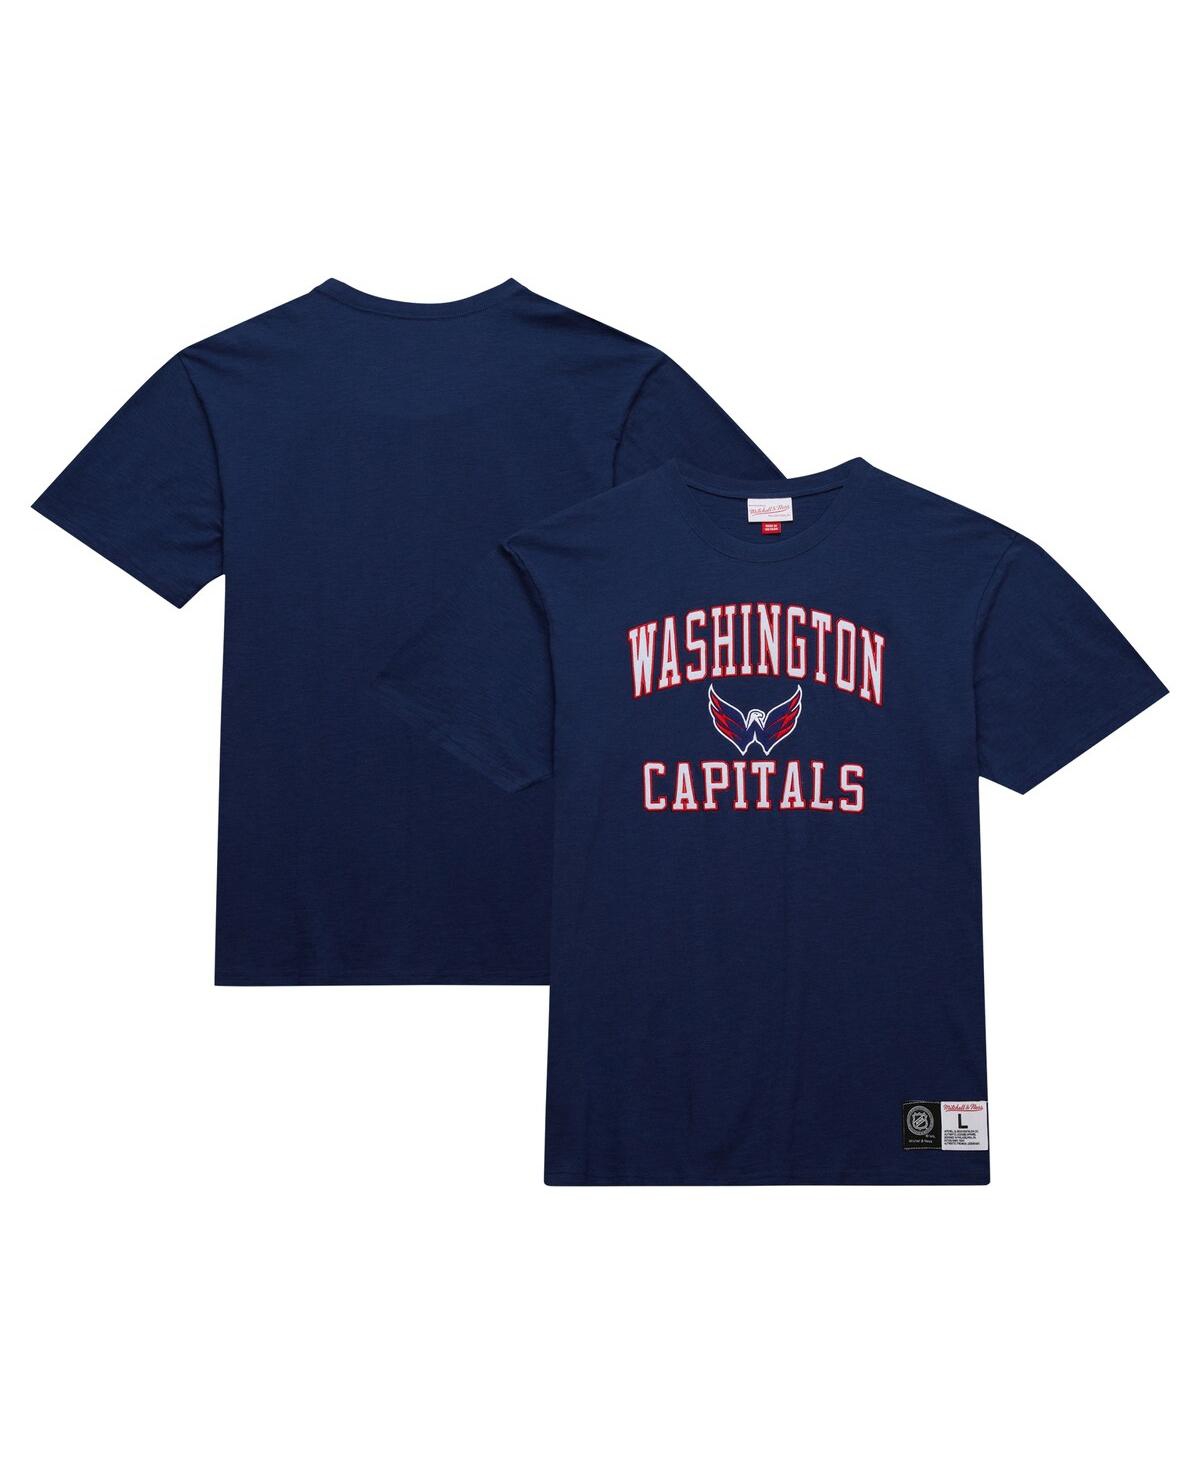 Men's Mitchell & Ness Navy Washington Capitals Legendary Slub T-shirt - Navy